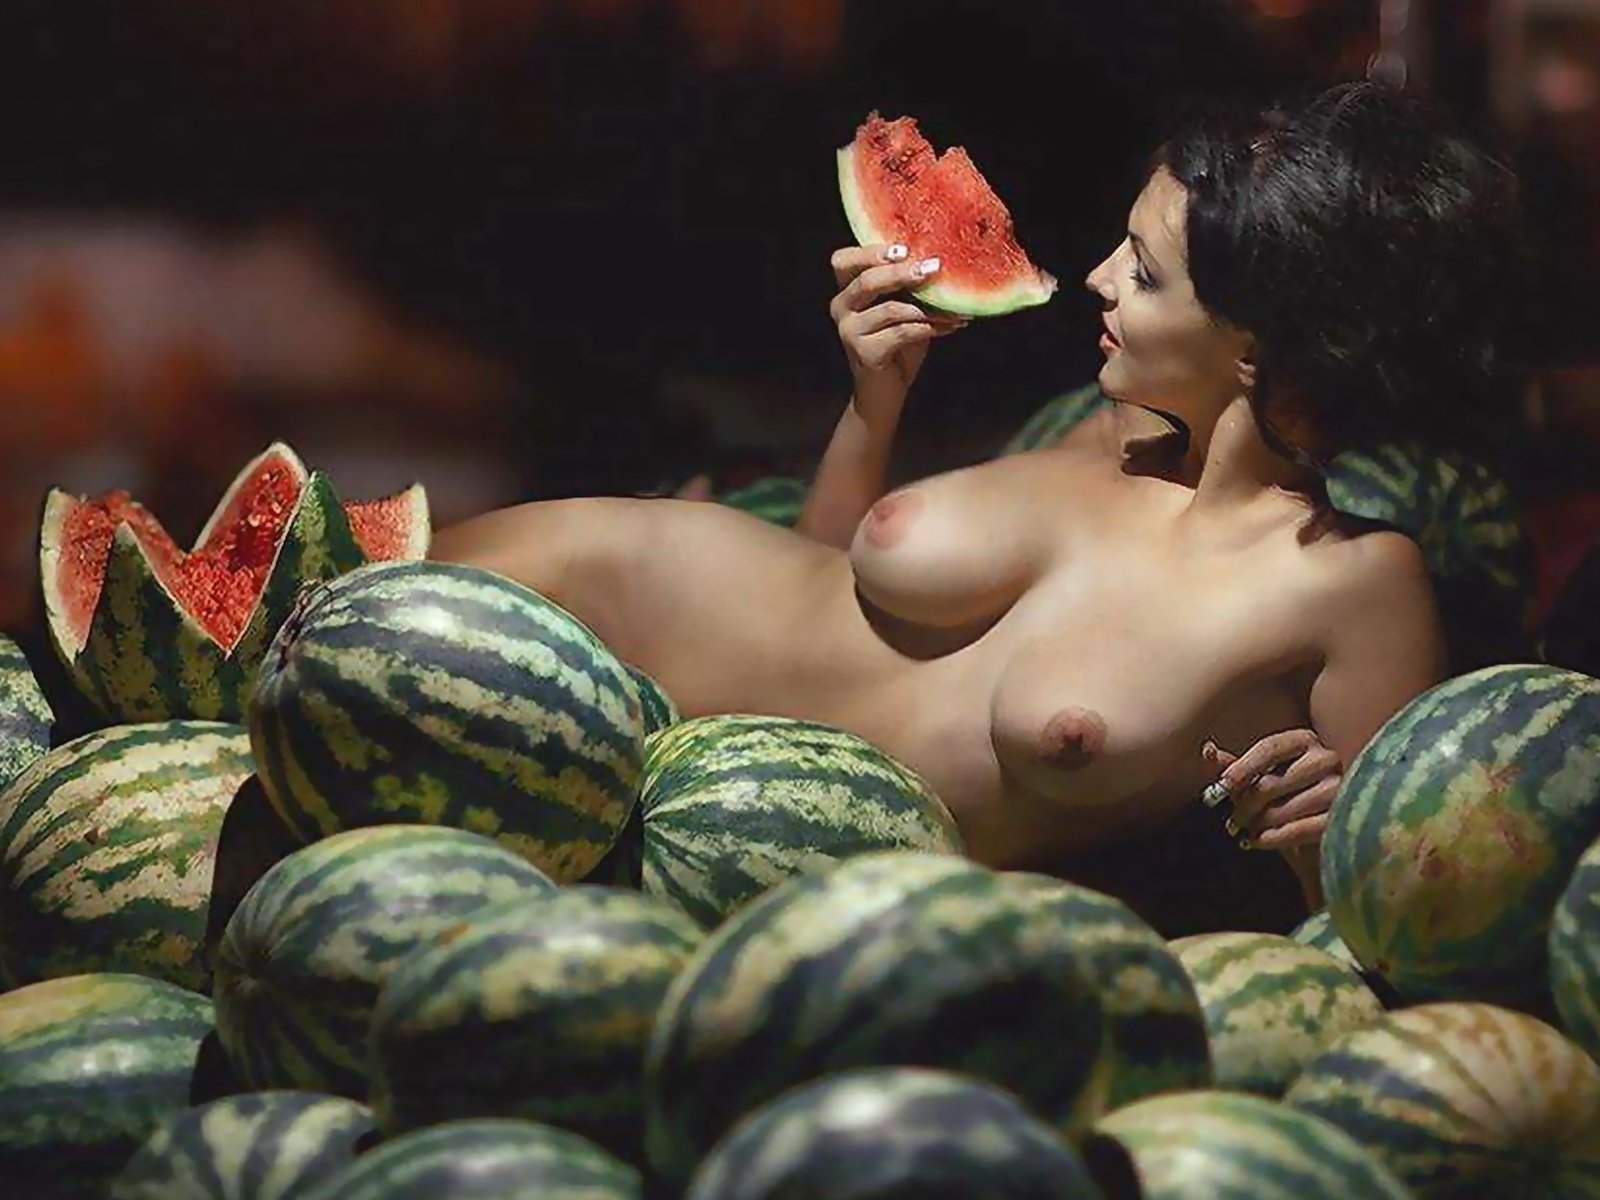 Tits Like Melons